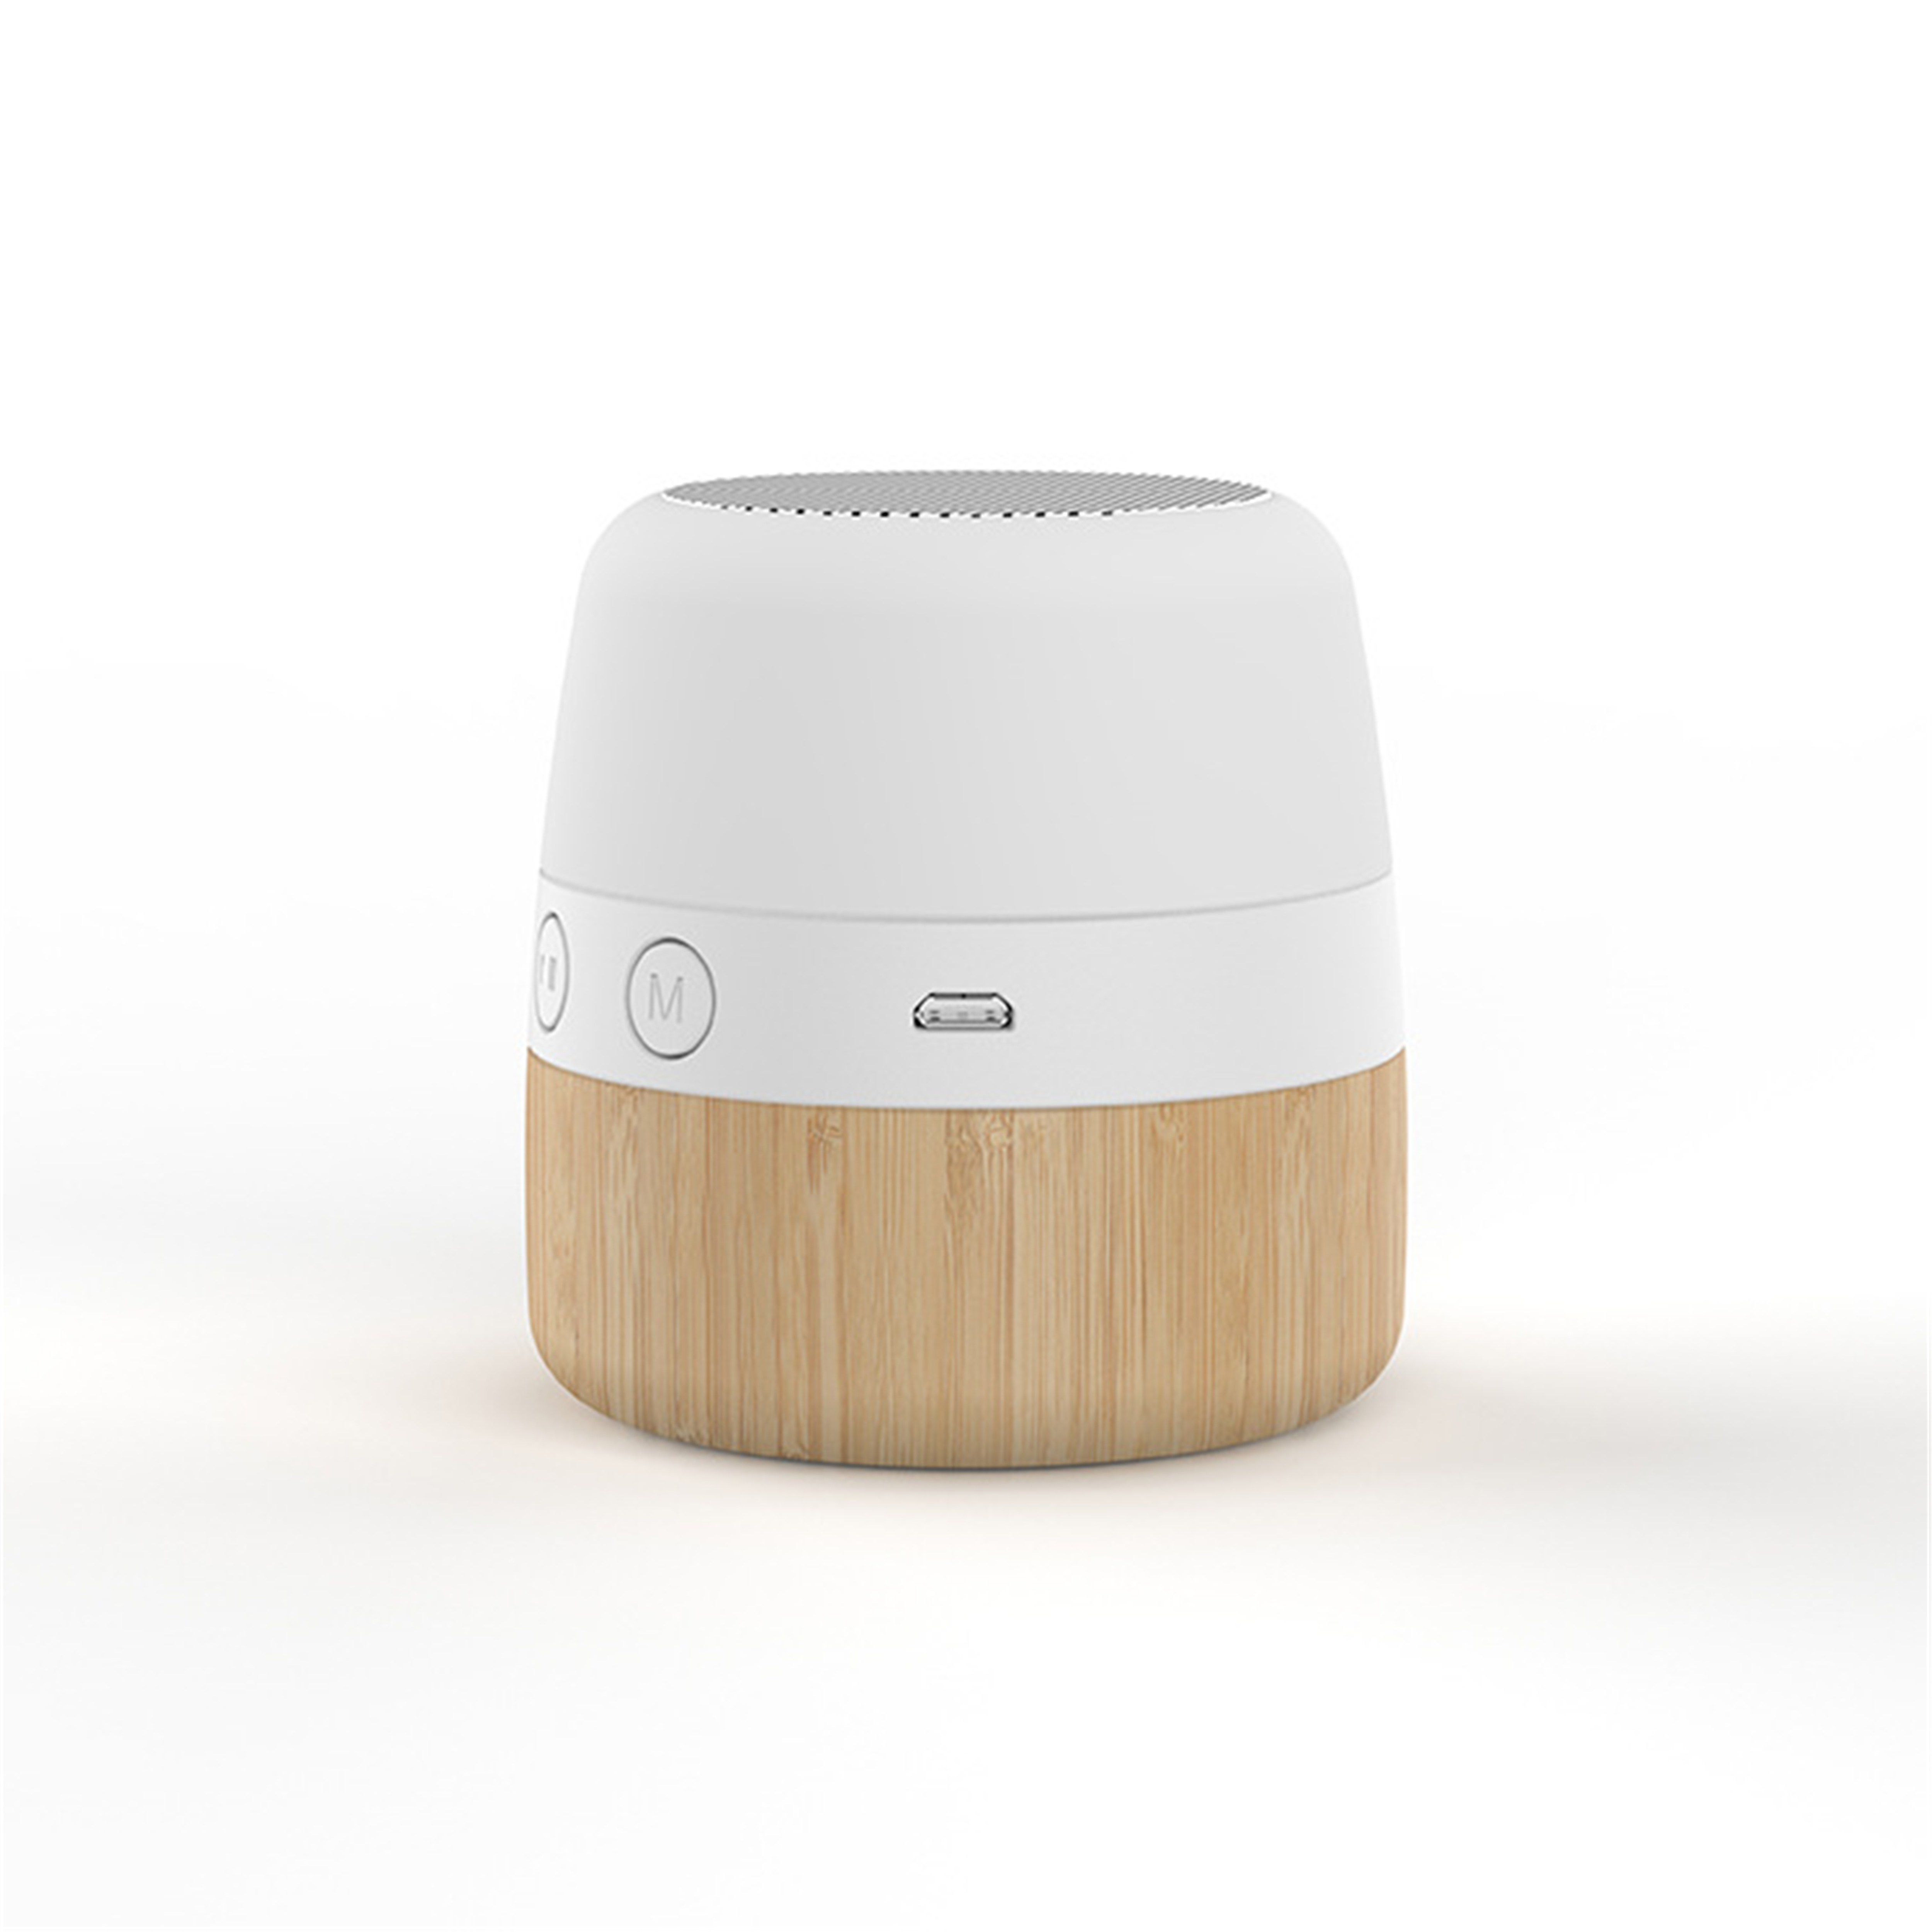 Portable wooden simple mini speaker Outdoor creative Bluetooth speaker Nightlight